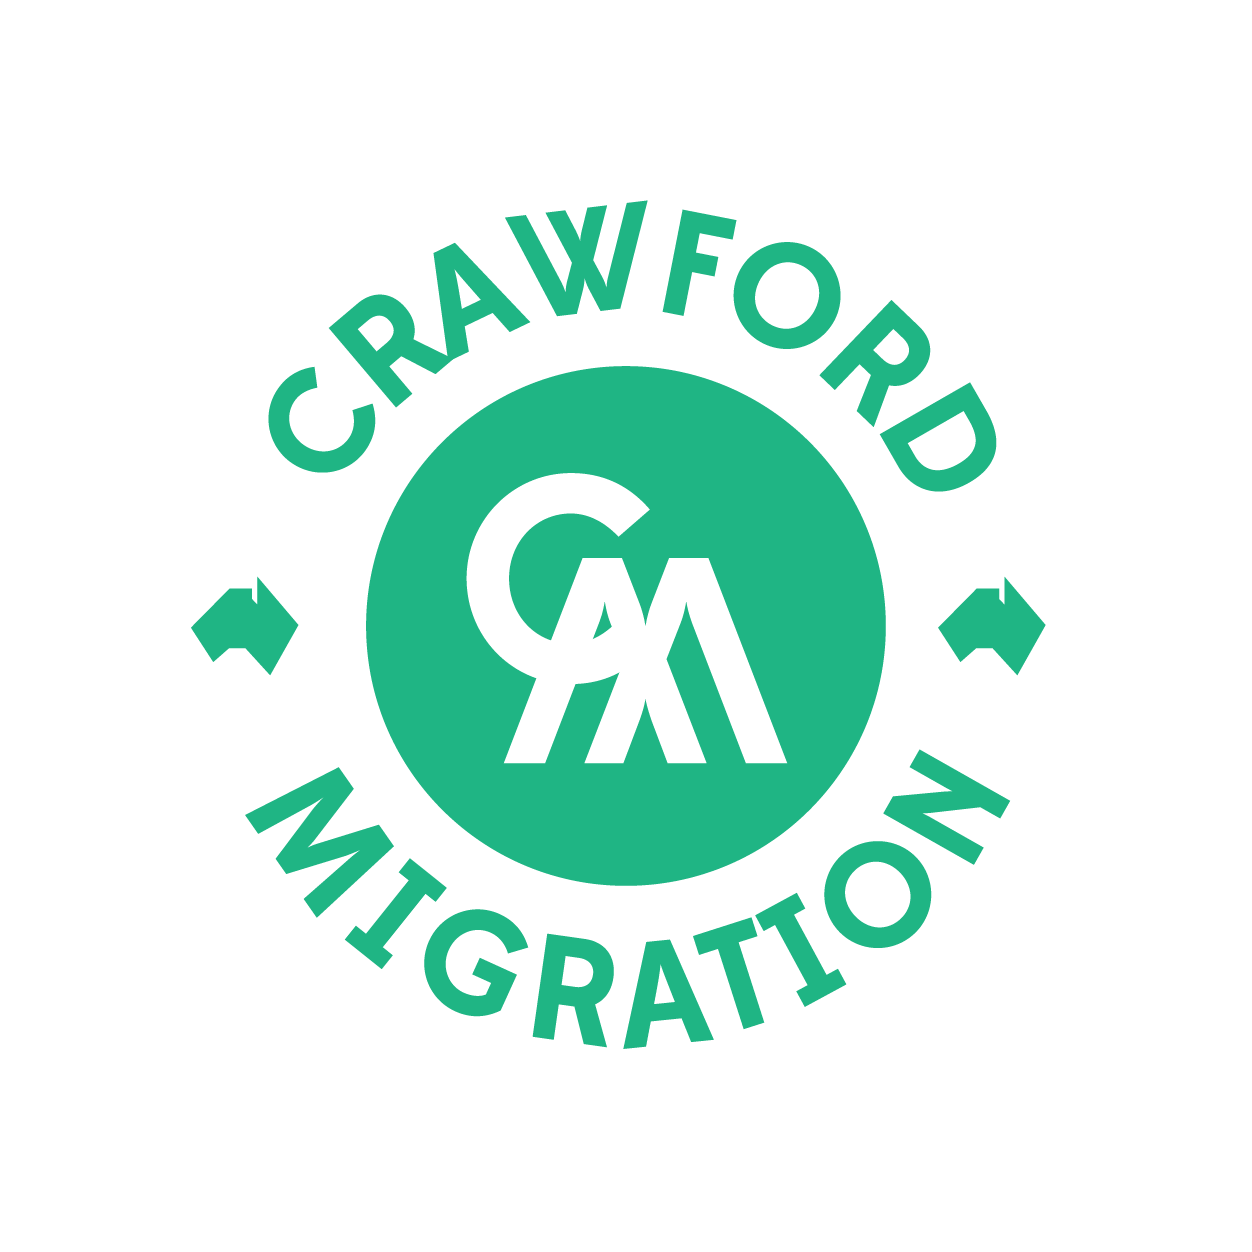 GCGD_CrawfordMigration_Logo-04